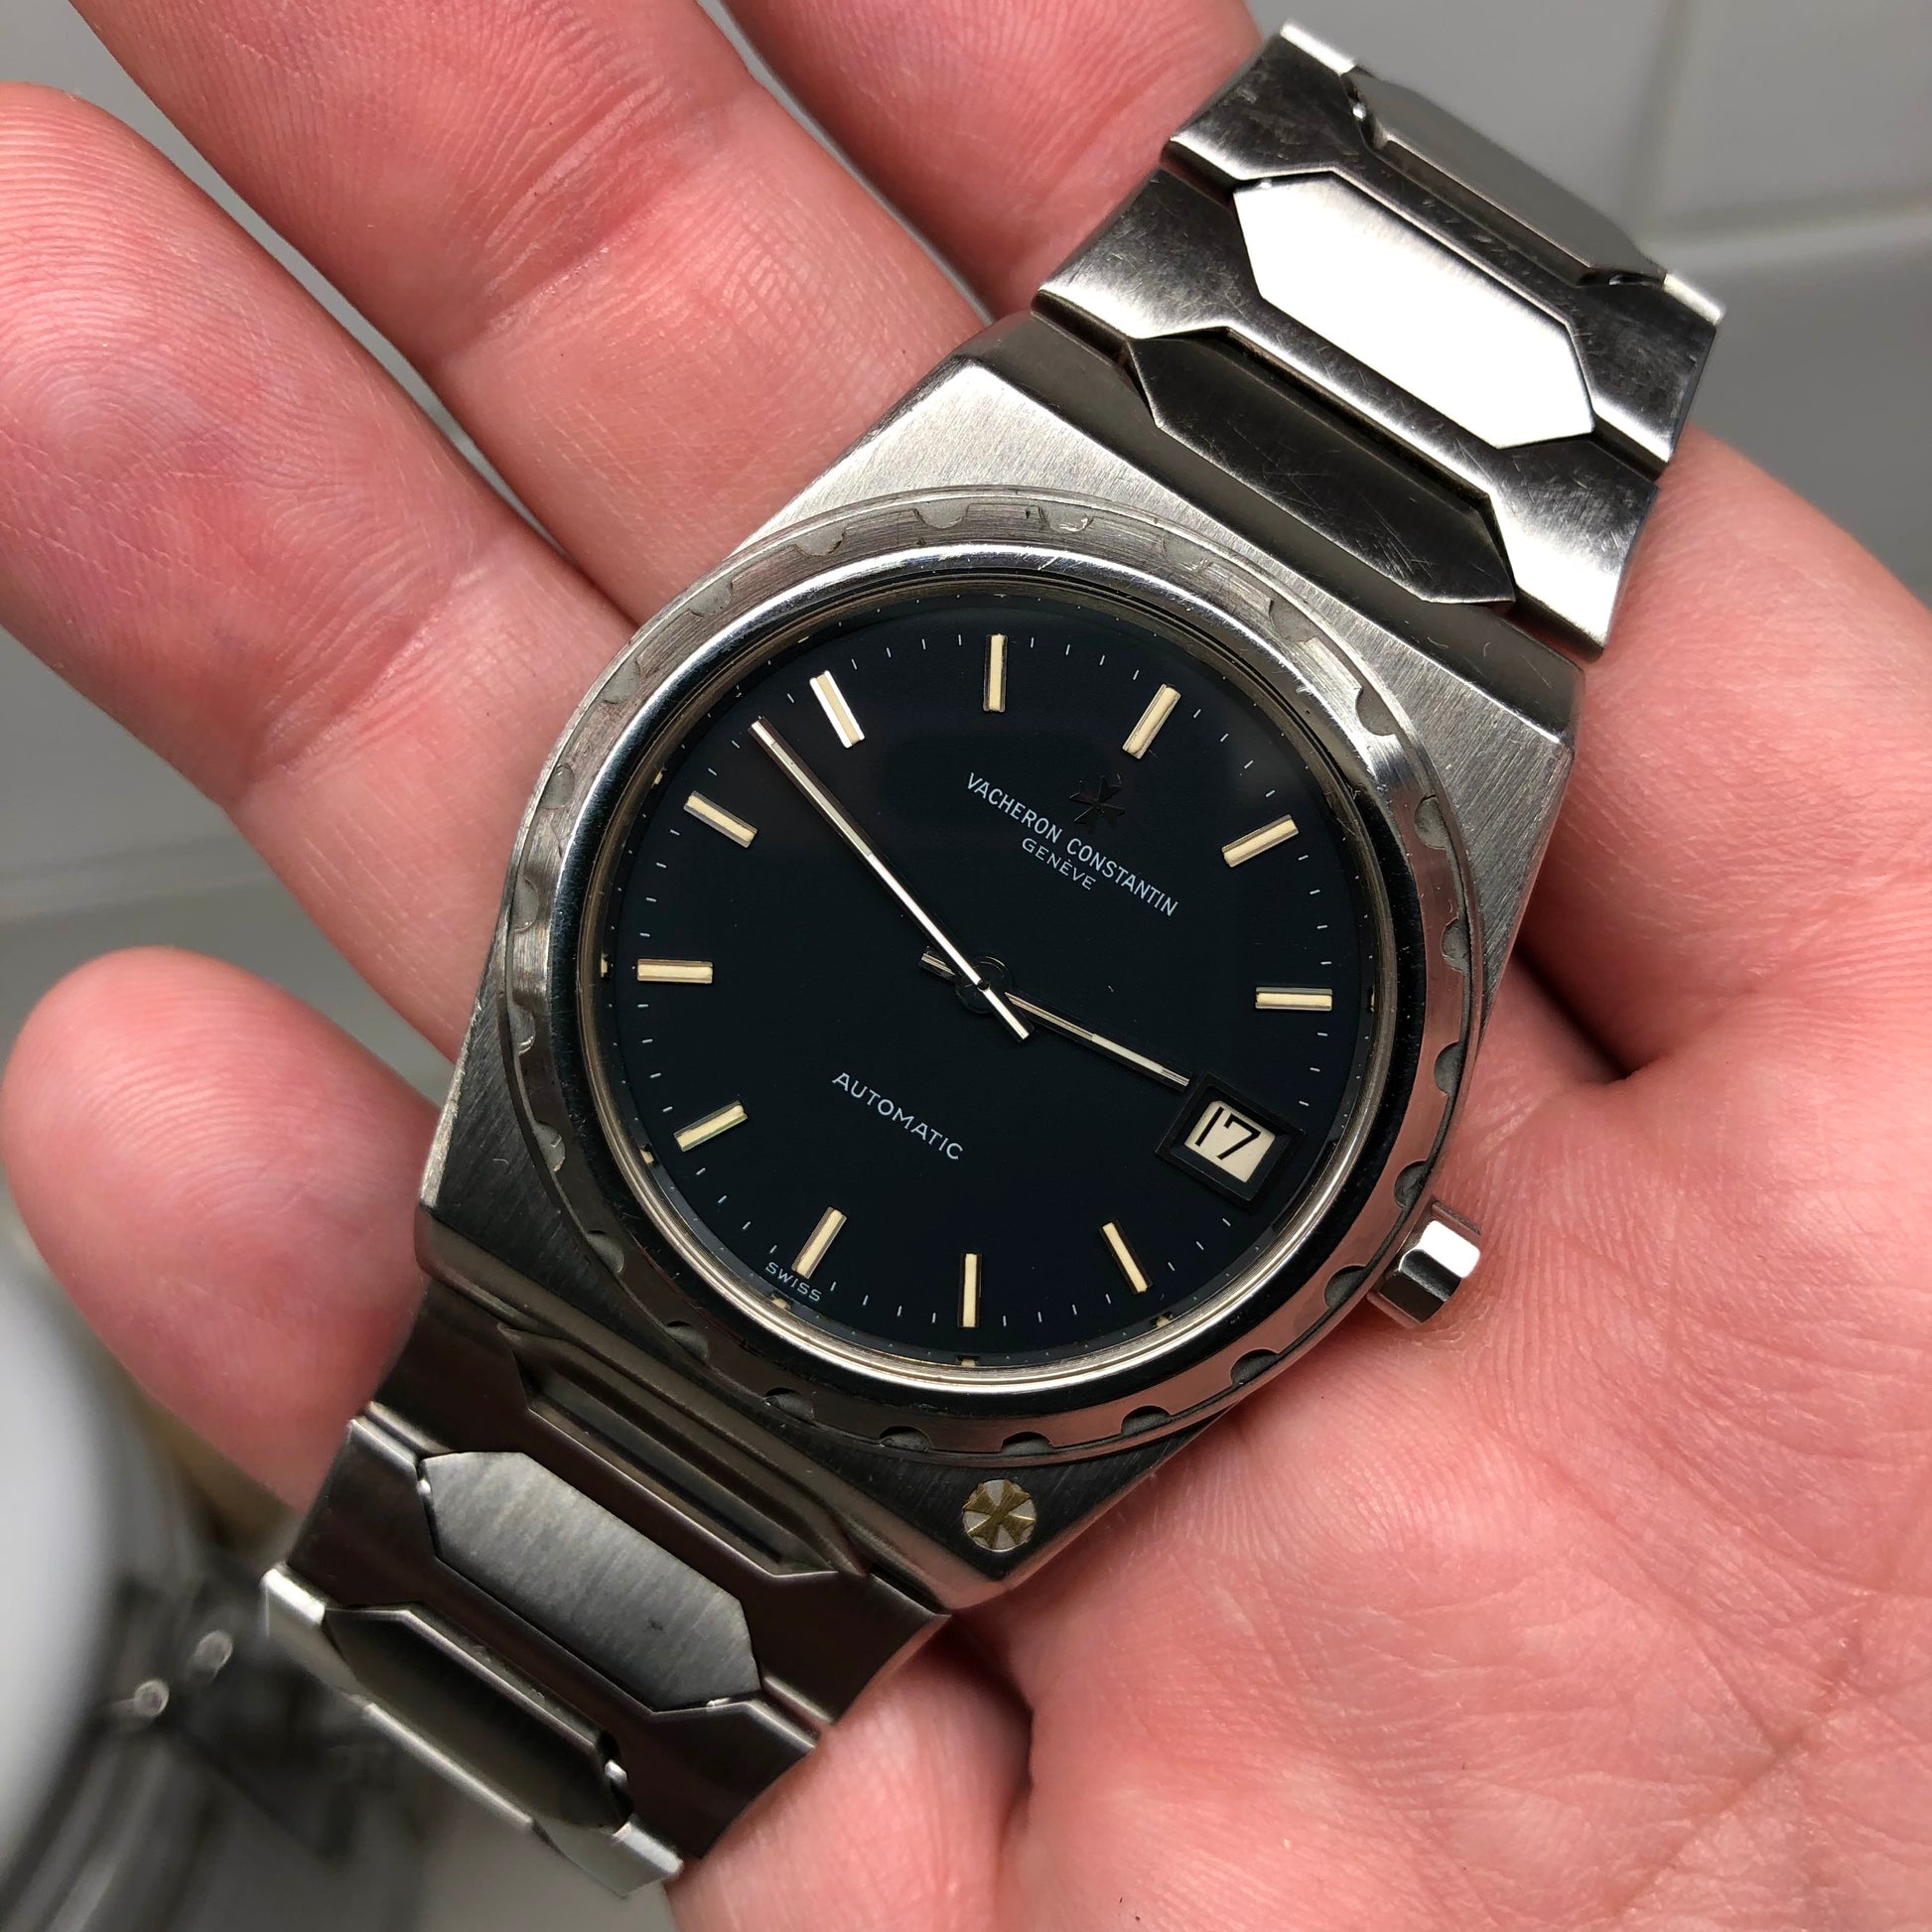 1978 Vacheron Constantin 222 Jumbo 44018 Steel Automatic 38mm Wristwatch with Original Guarantee Papers - Hashtag Watch Company